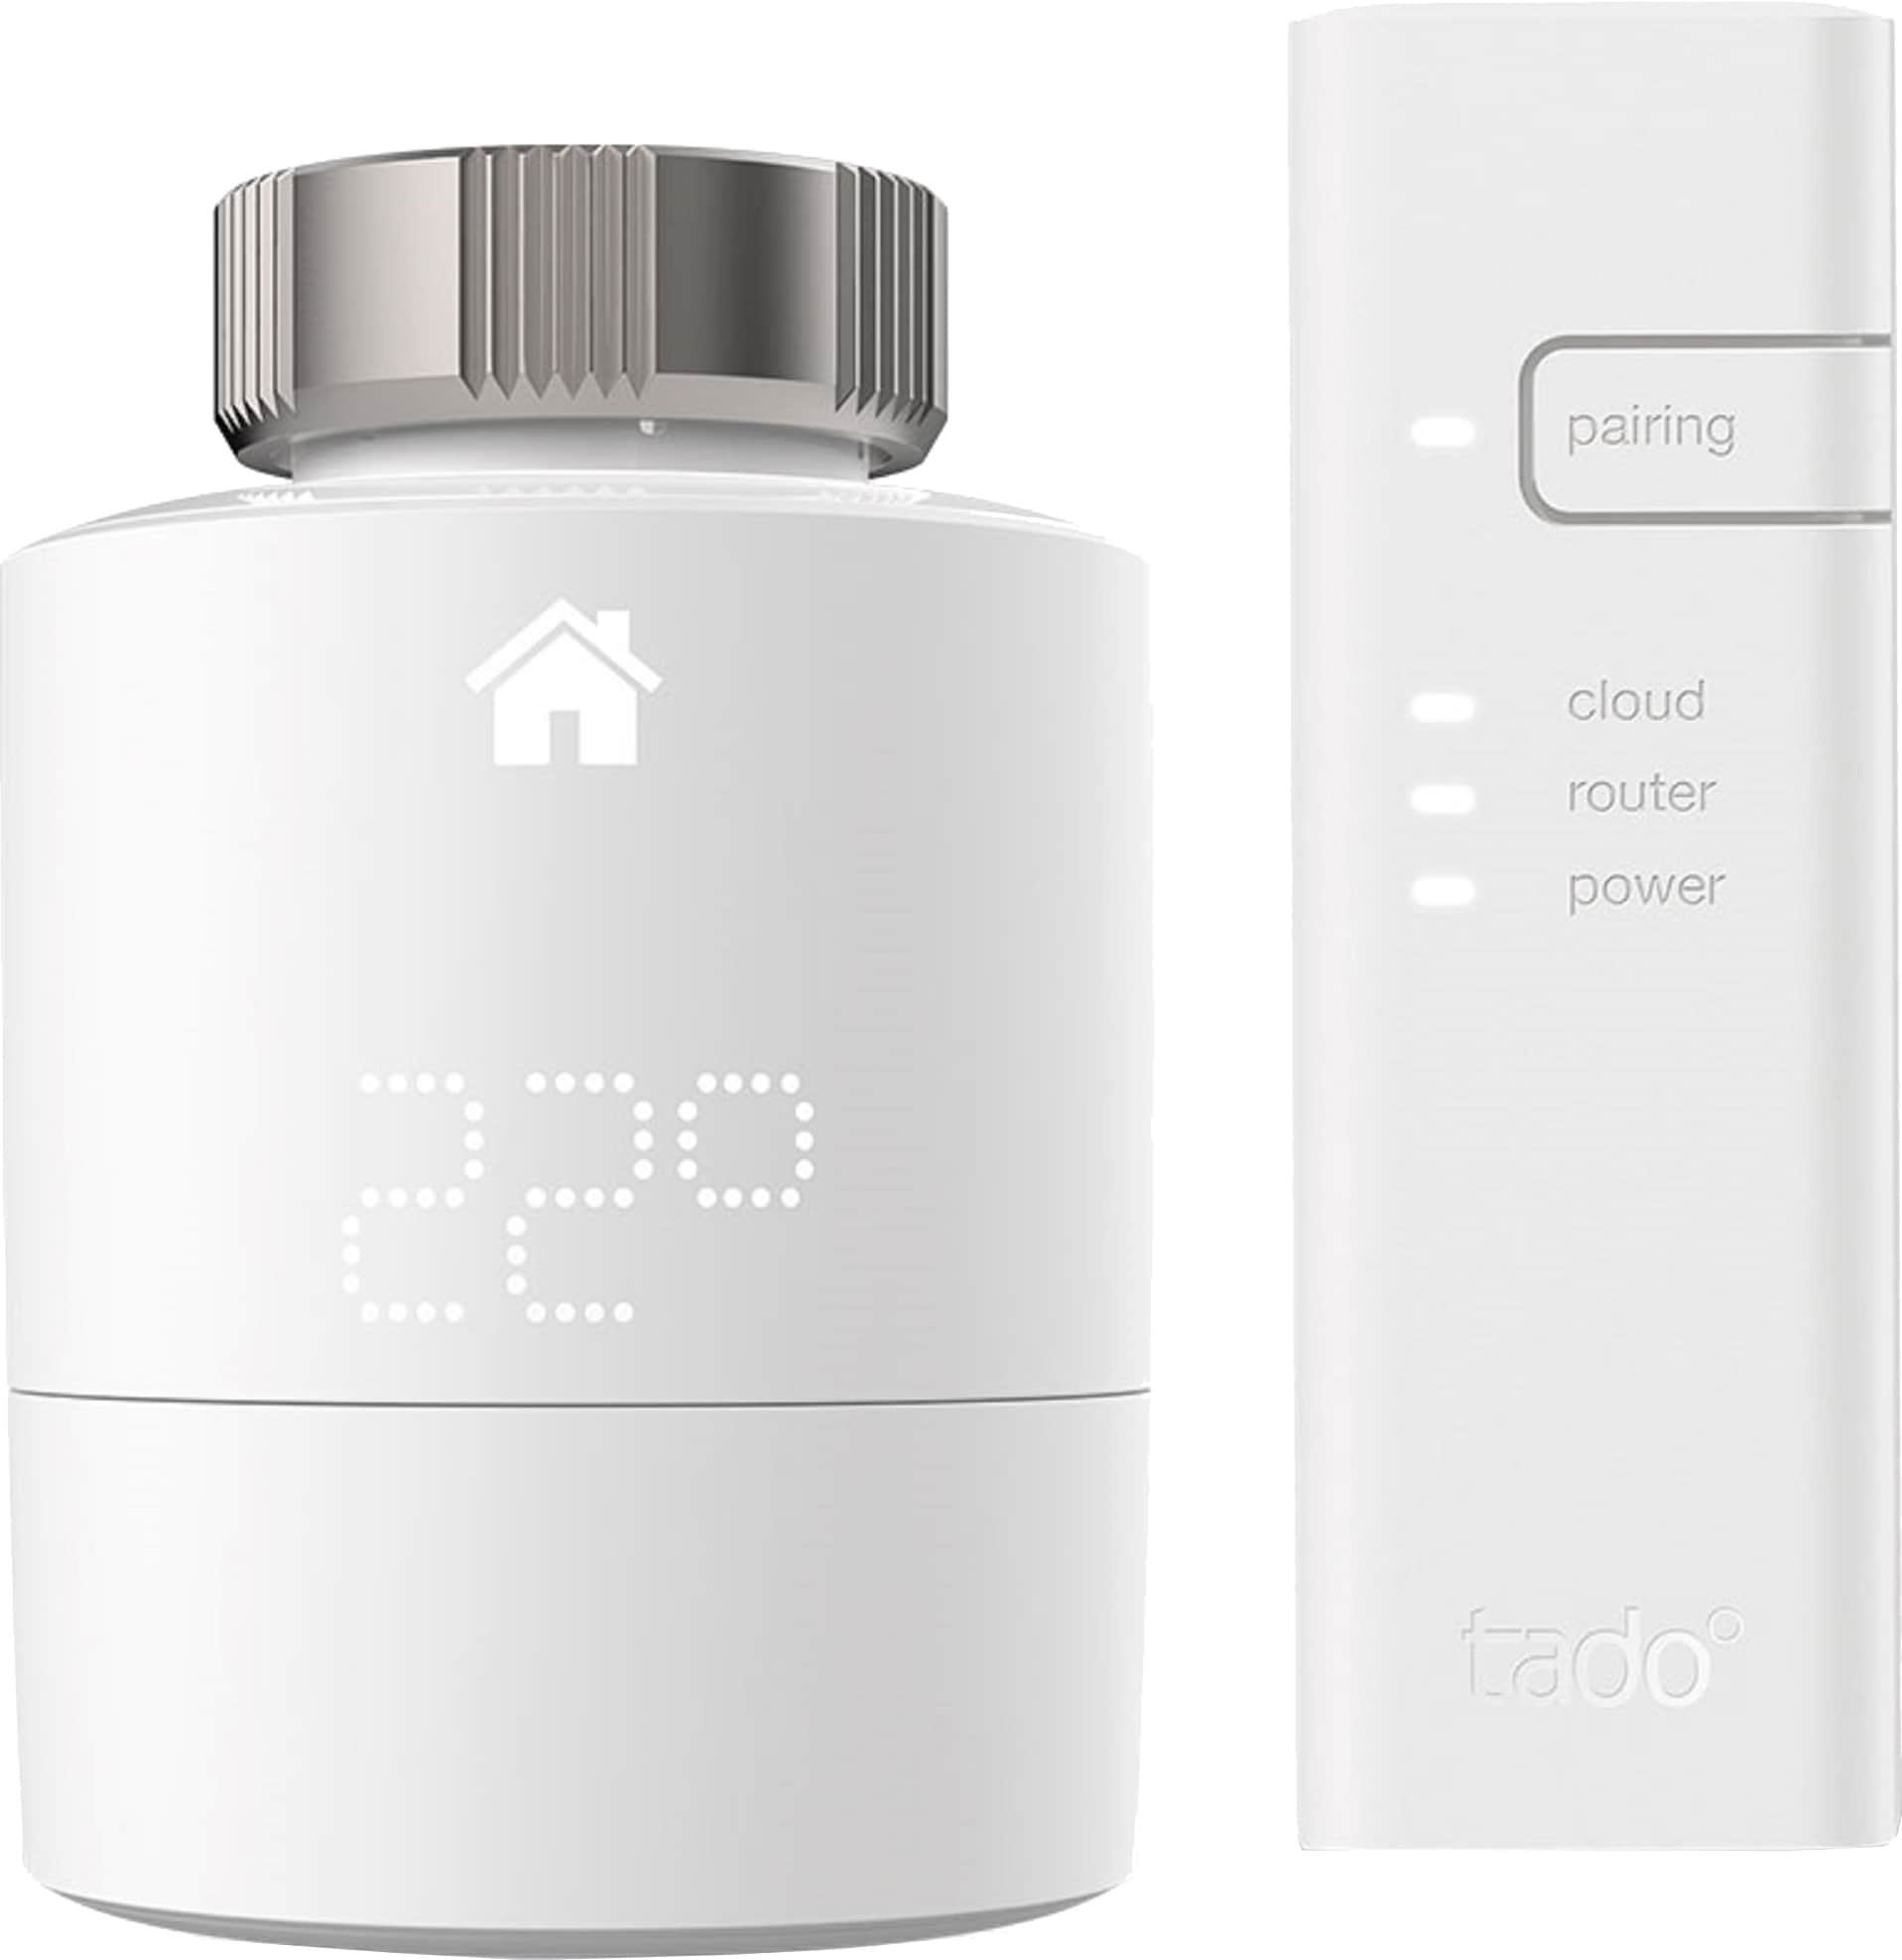 Smart Radiator Thermostat - Starter Kit V3+